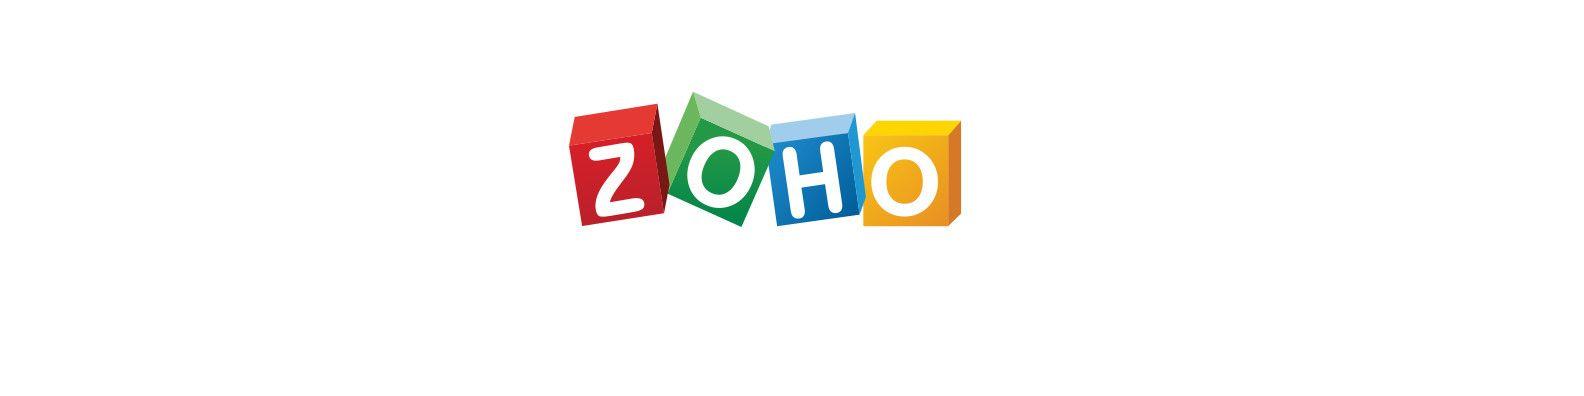 Zoho Logo - Zoho Corporation | LinkedIn